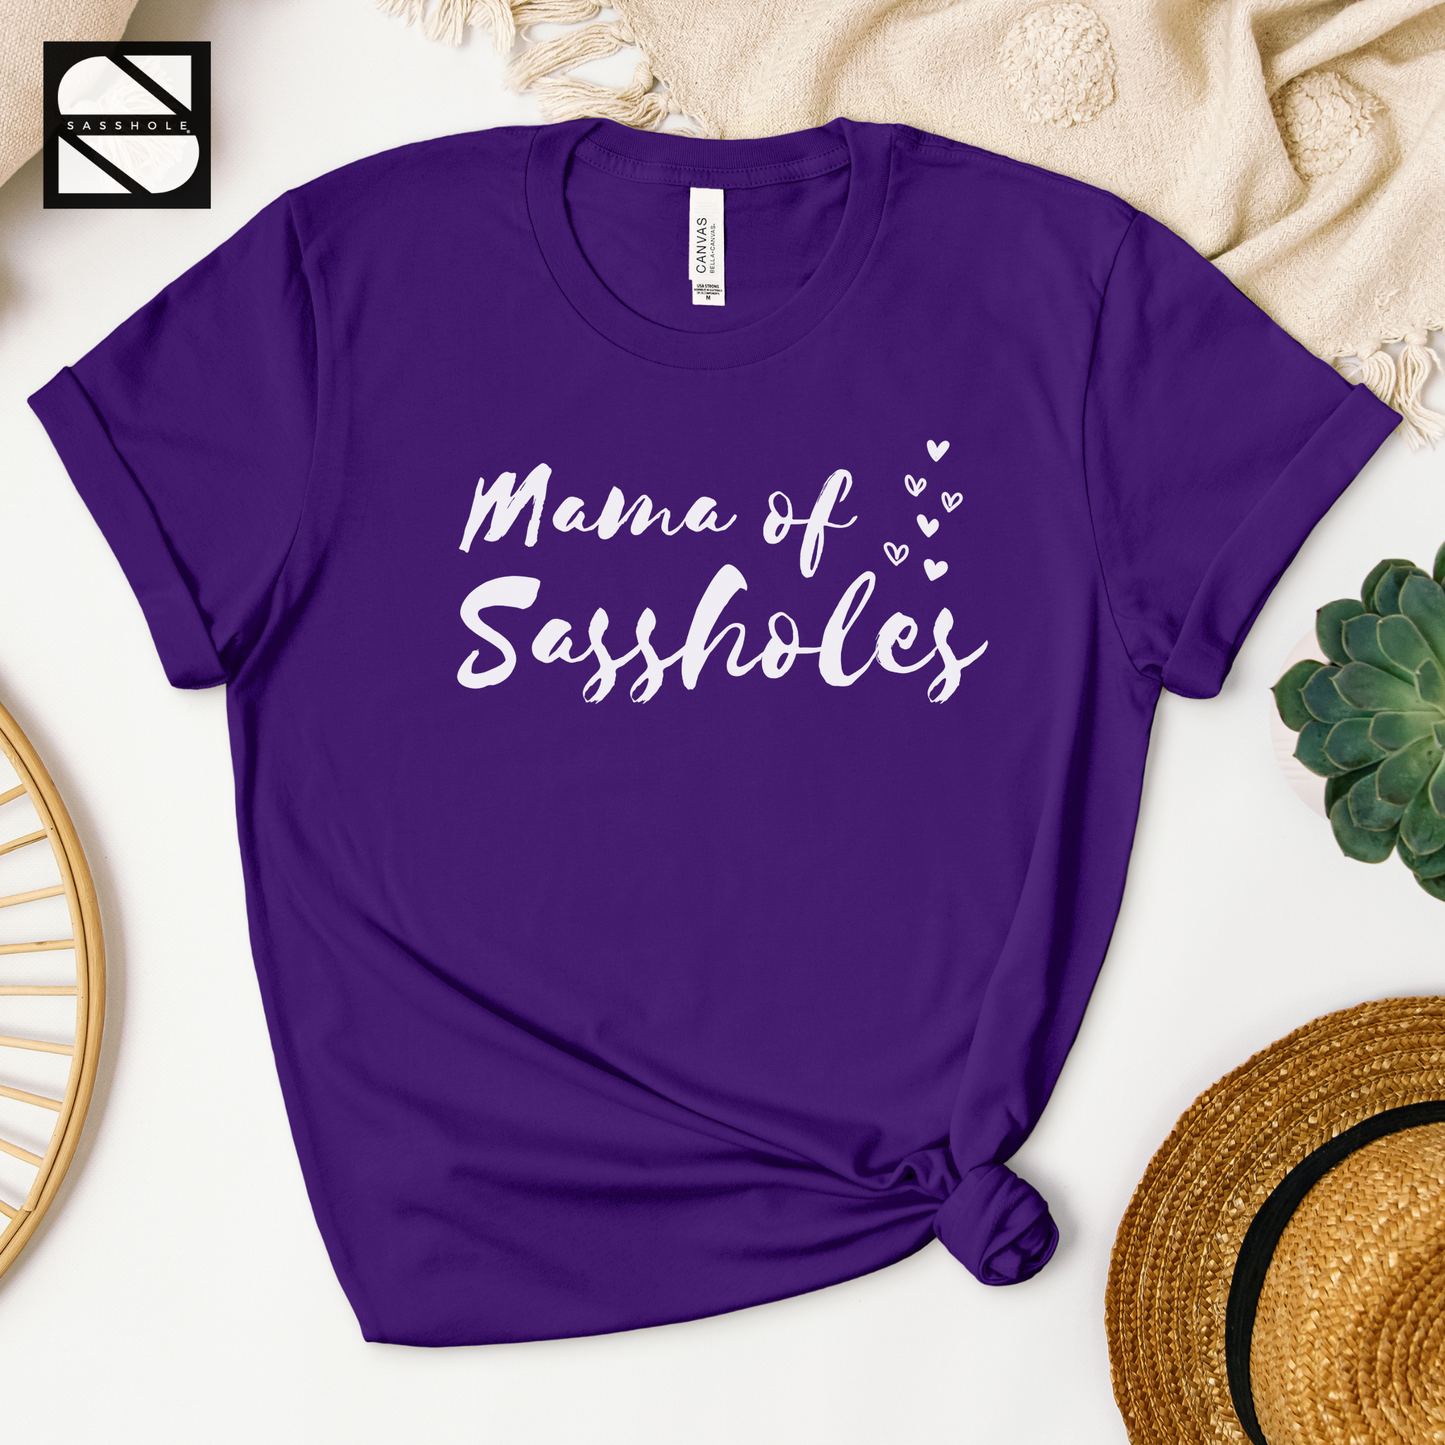 Mama of Sassholes: Mom Humor Tee for Mom's